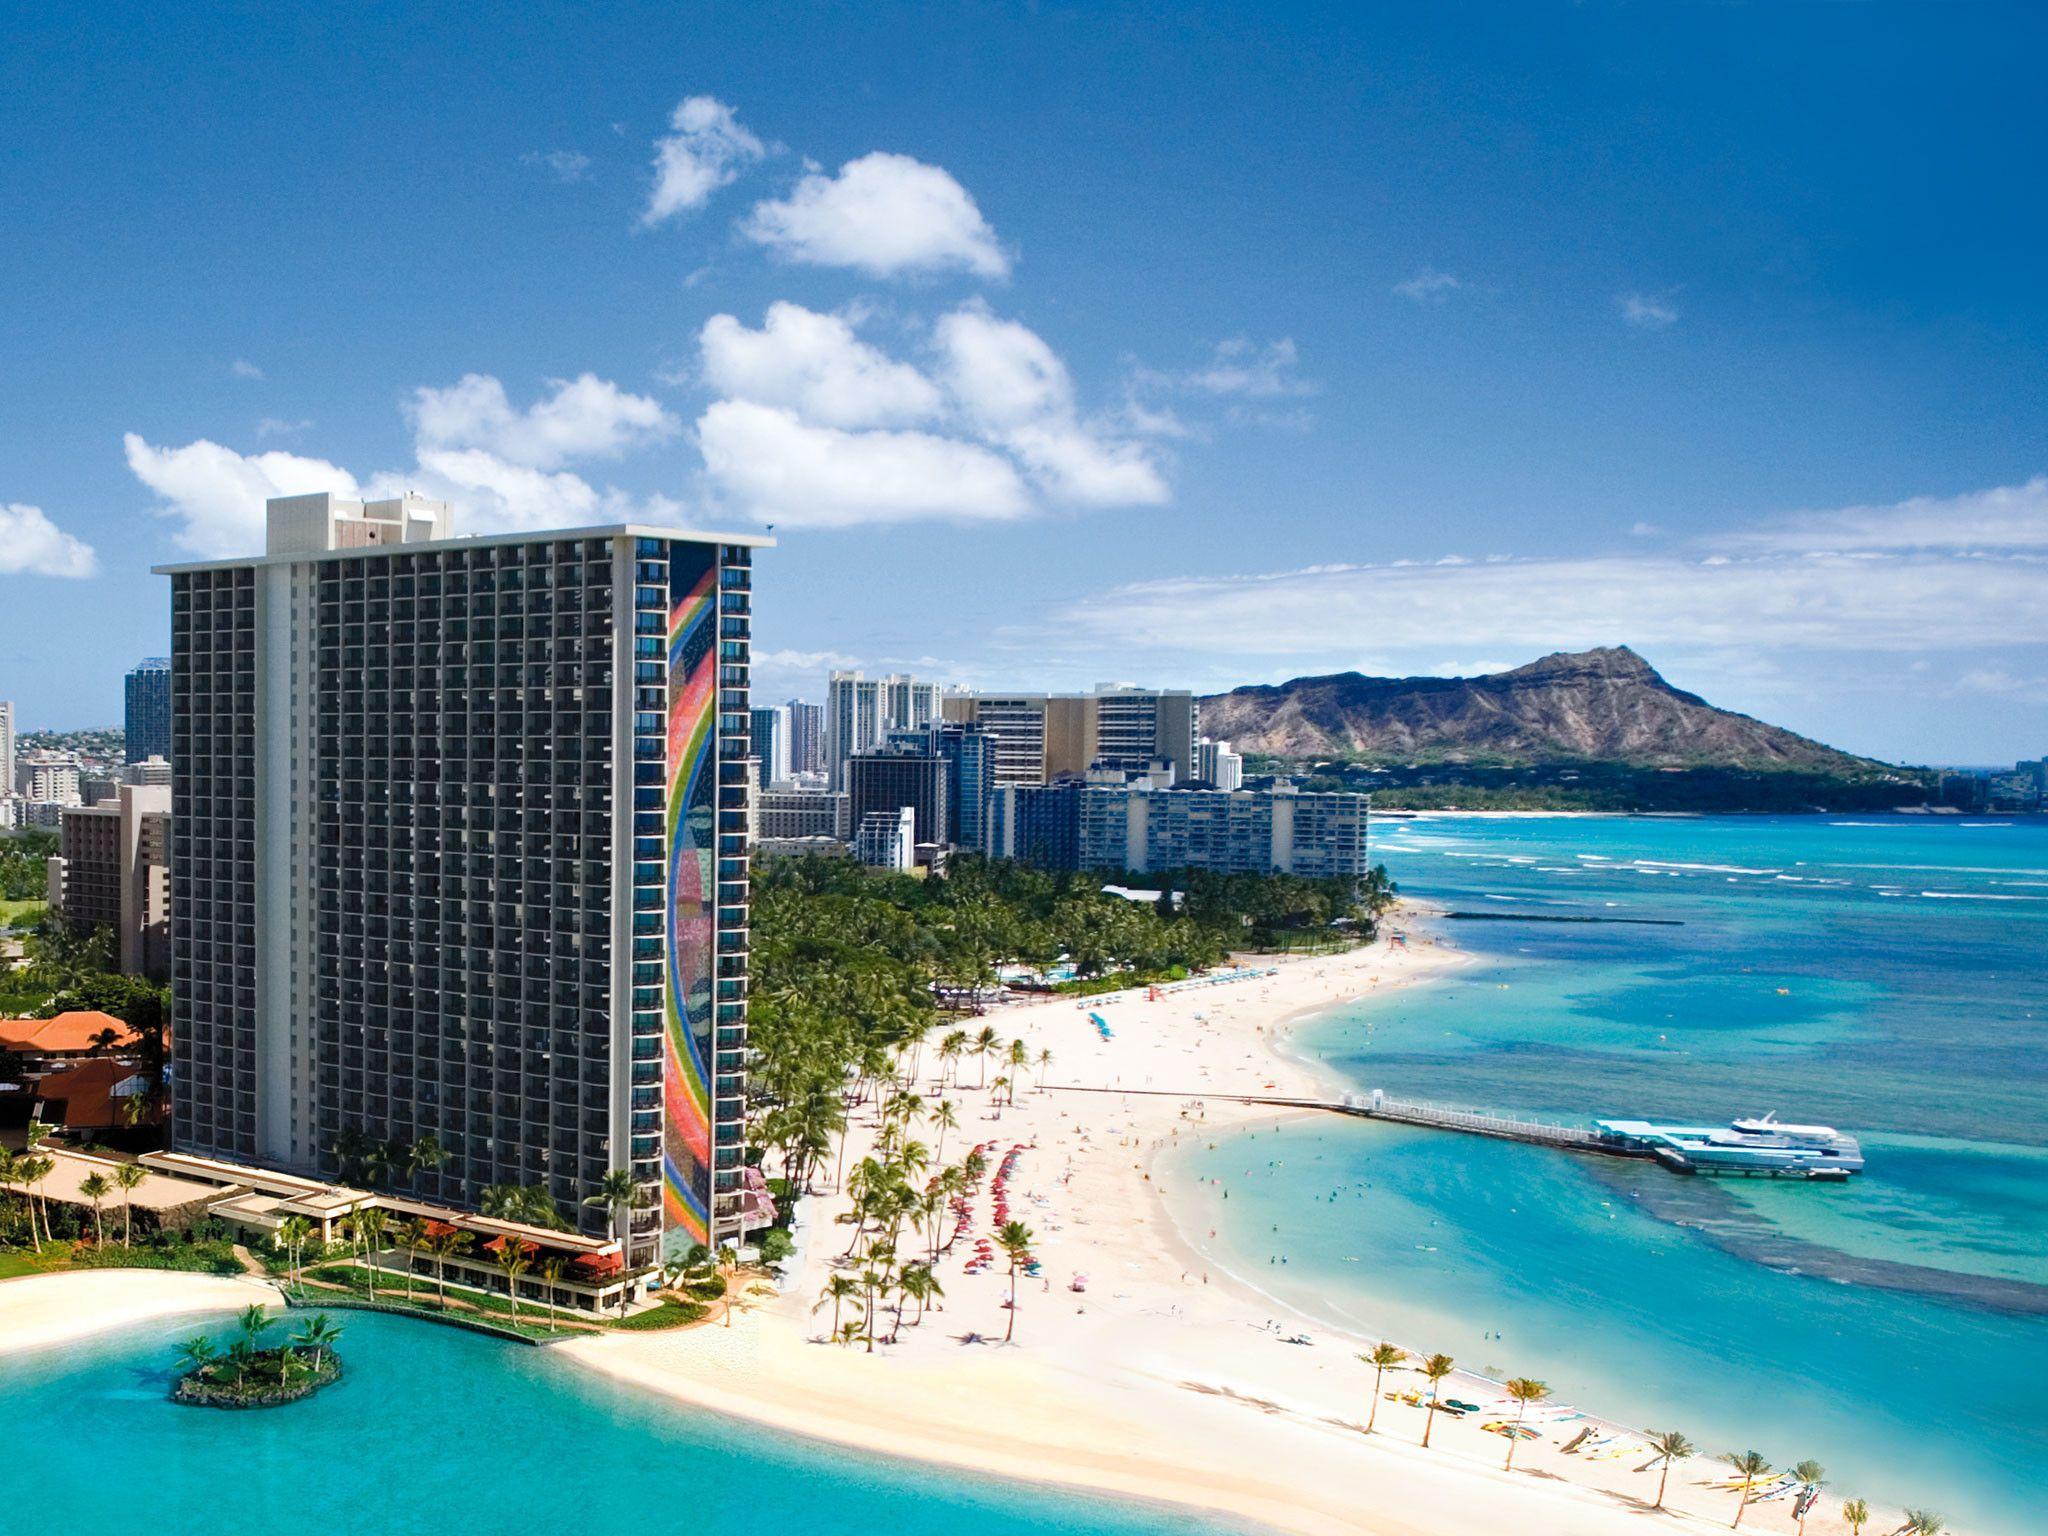 Waikiki Beach Photo. Beautiful image HD Picture & Desktop Wallpaper